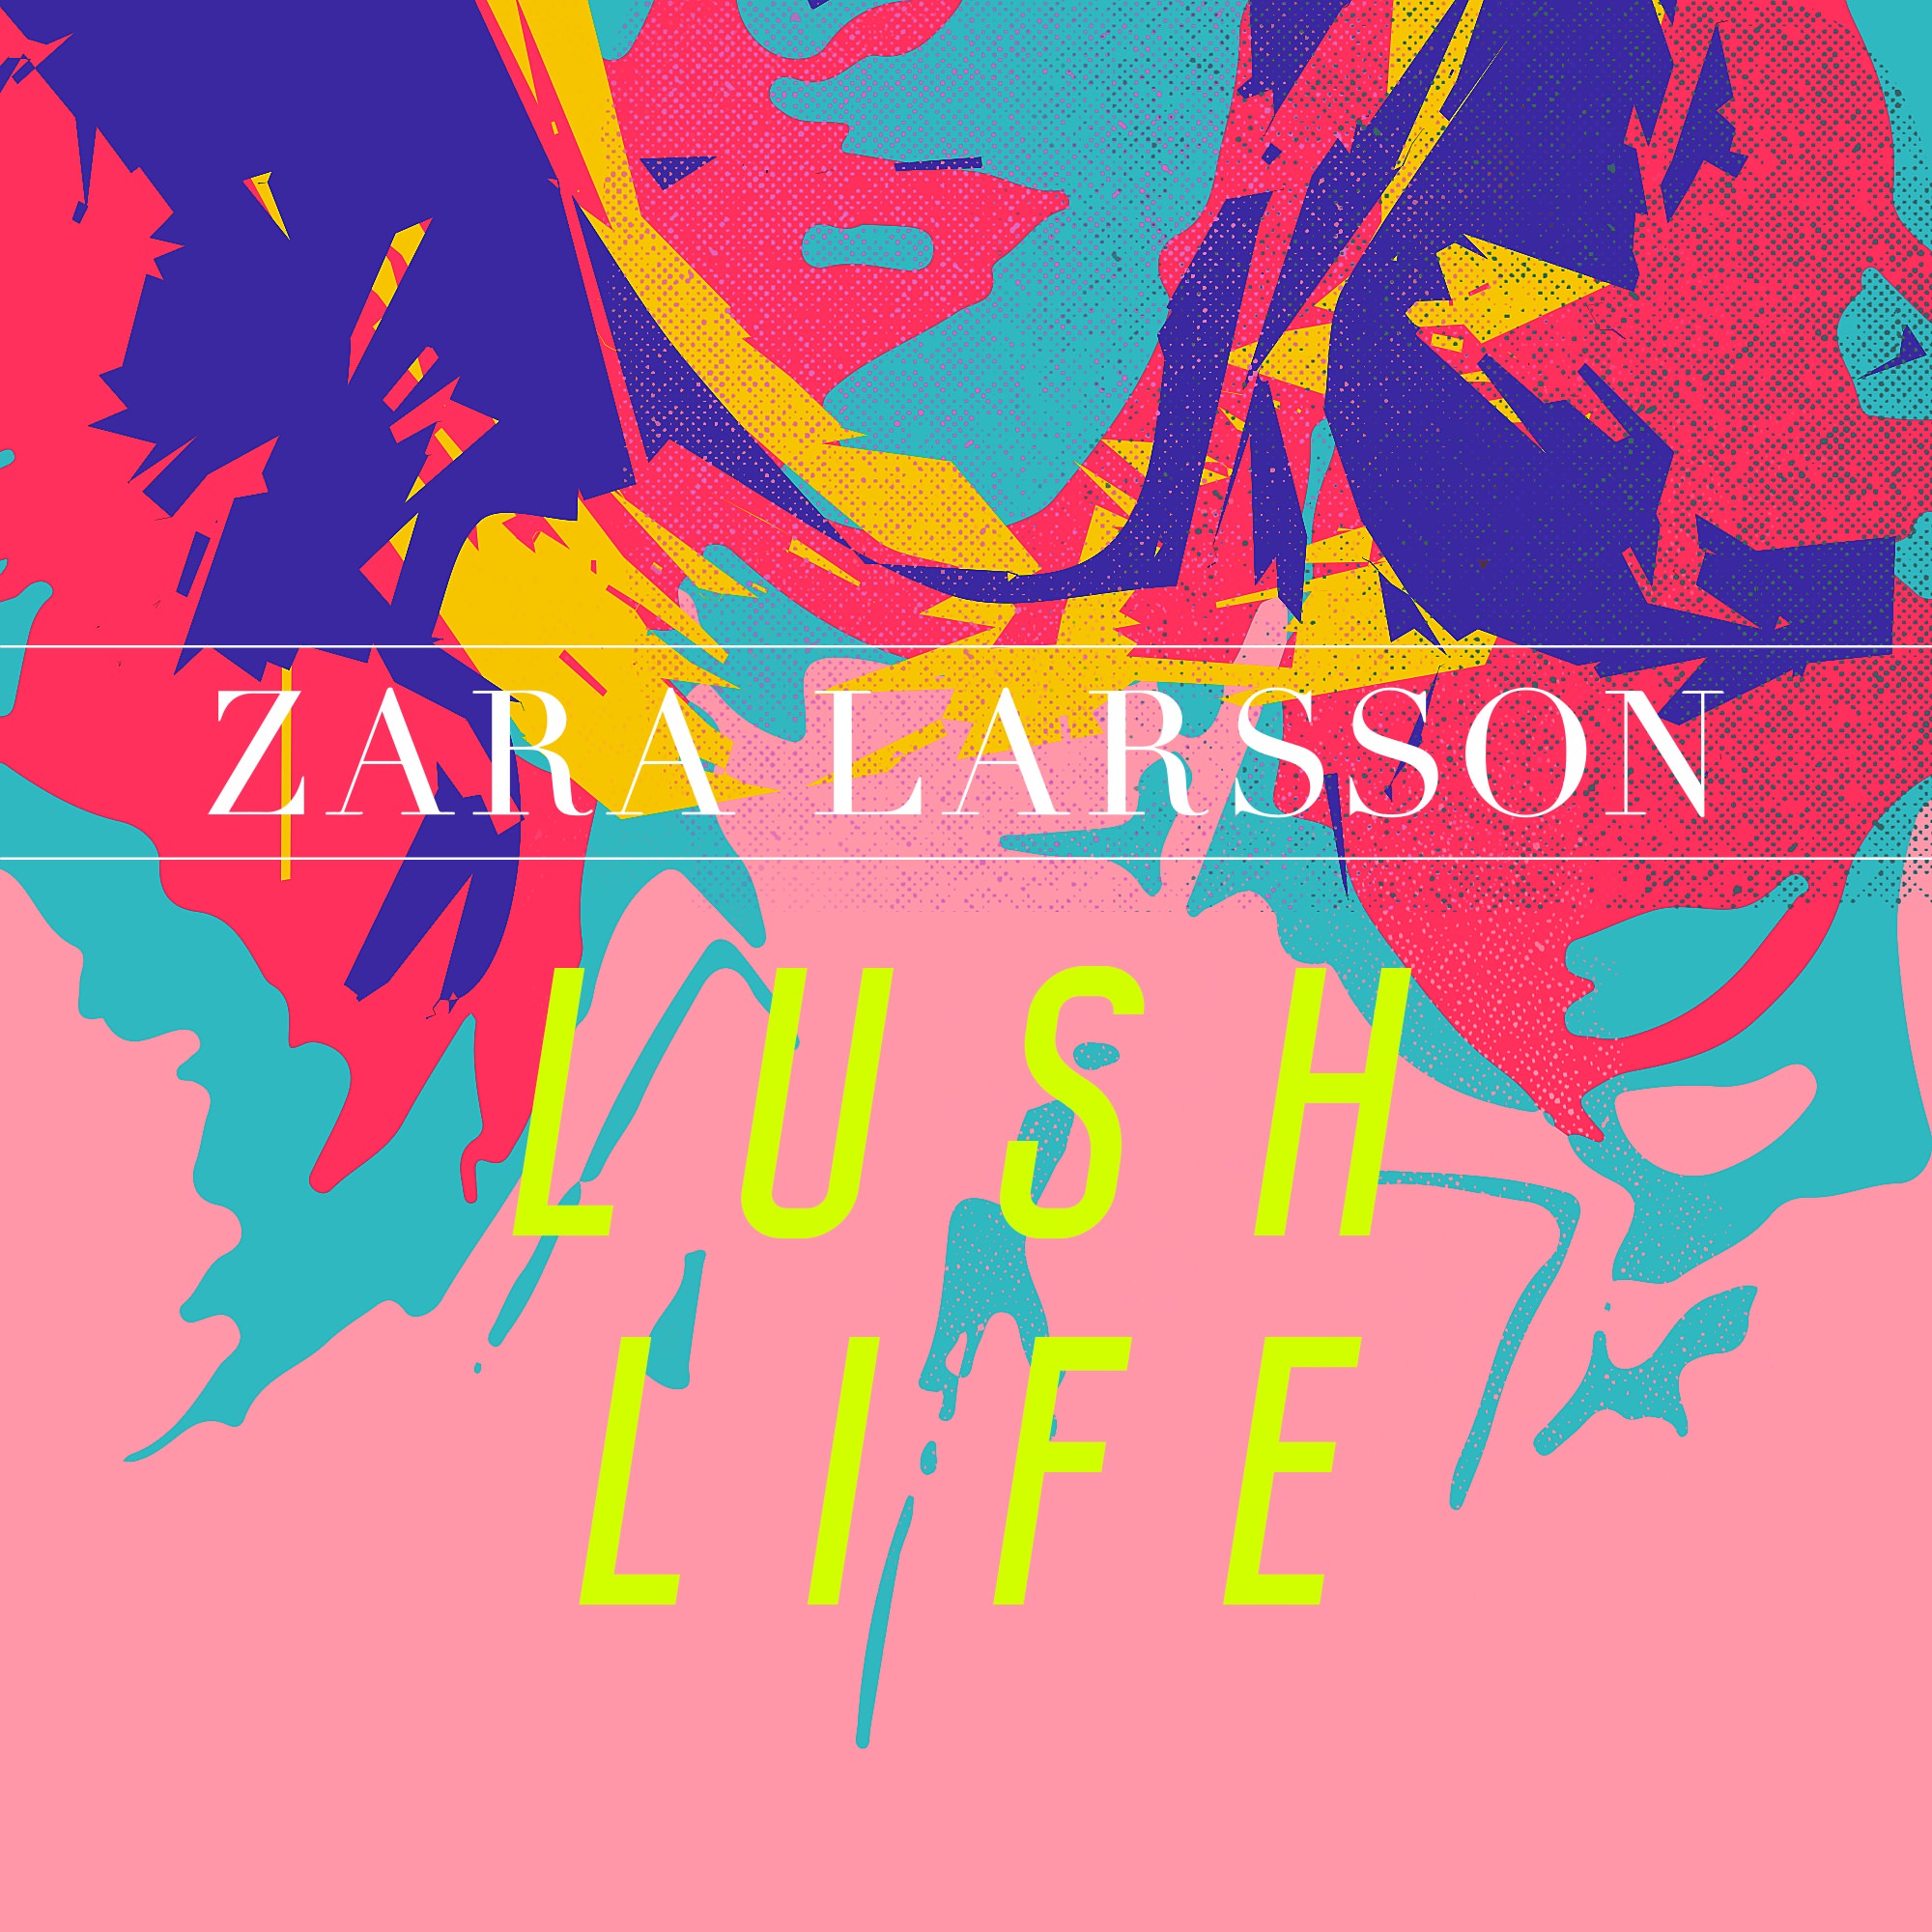 капак триъгълник слушам zara larsson lush life text - garydhenry.com